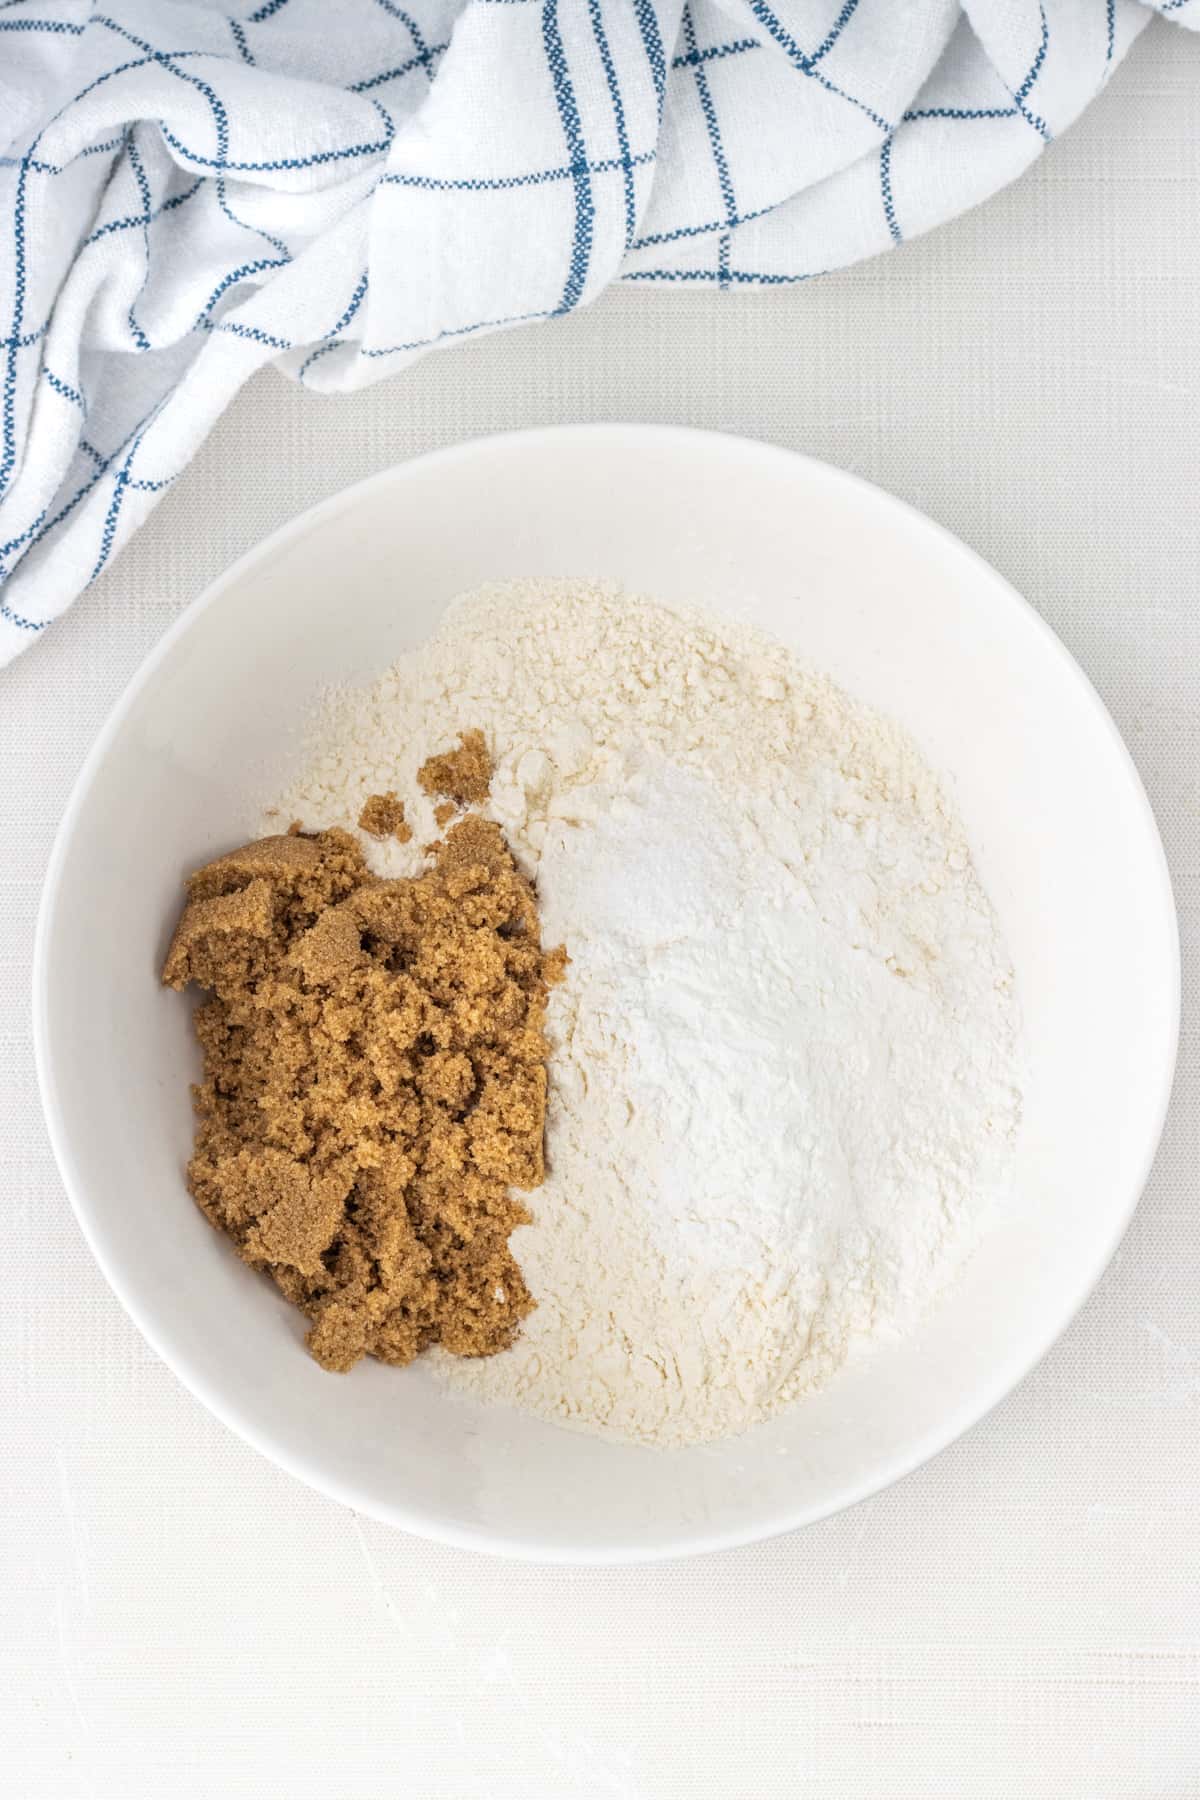 Flour, brown sugar, baking powder, and salt in a bowl next to a towel.